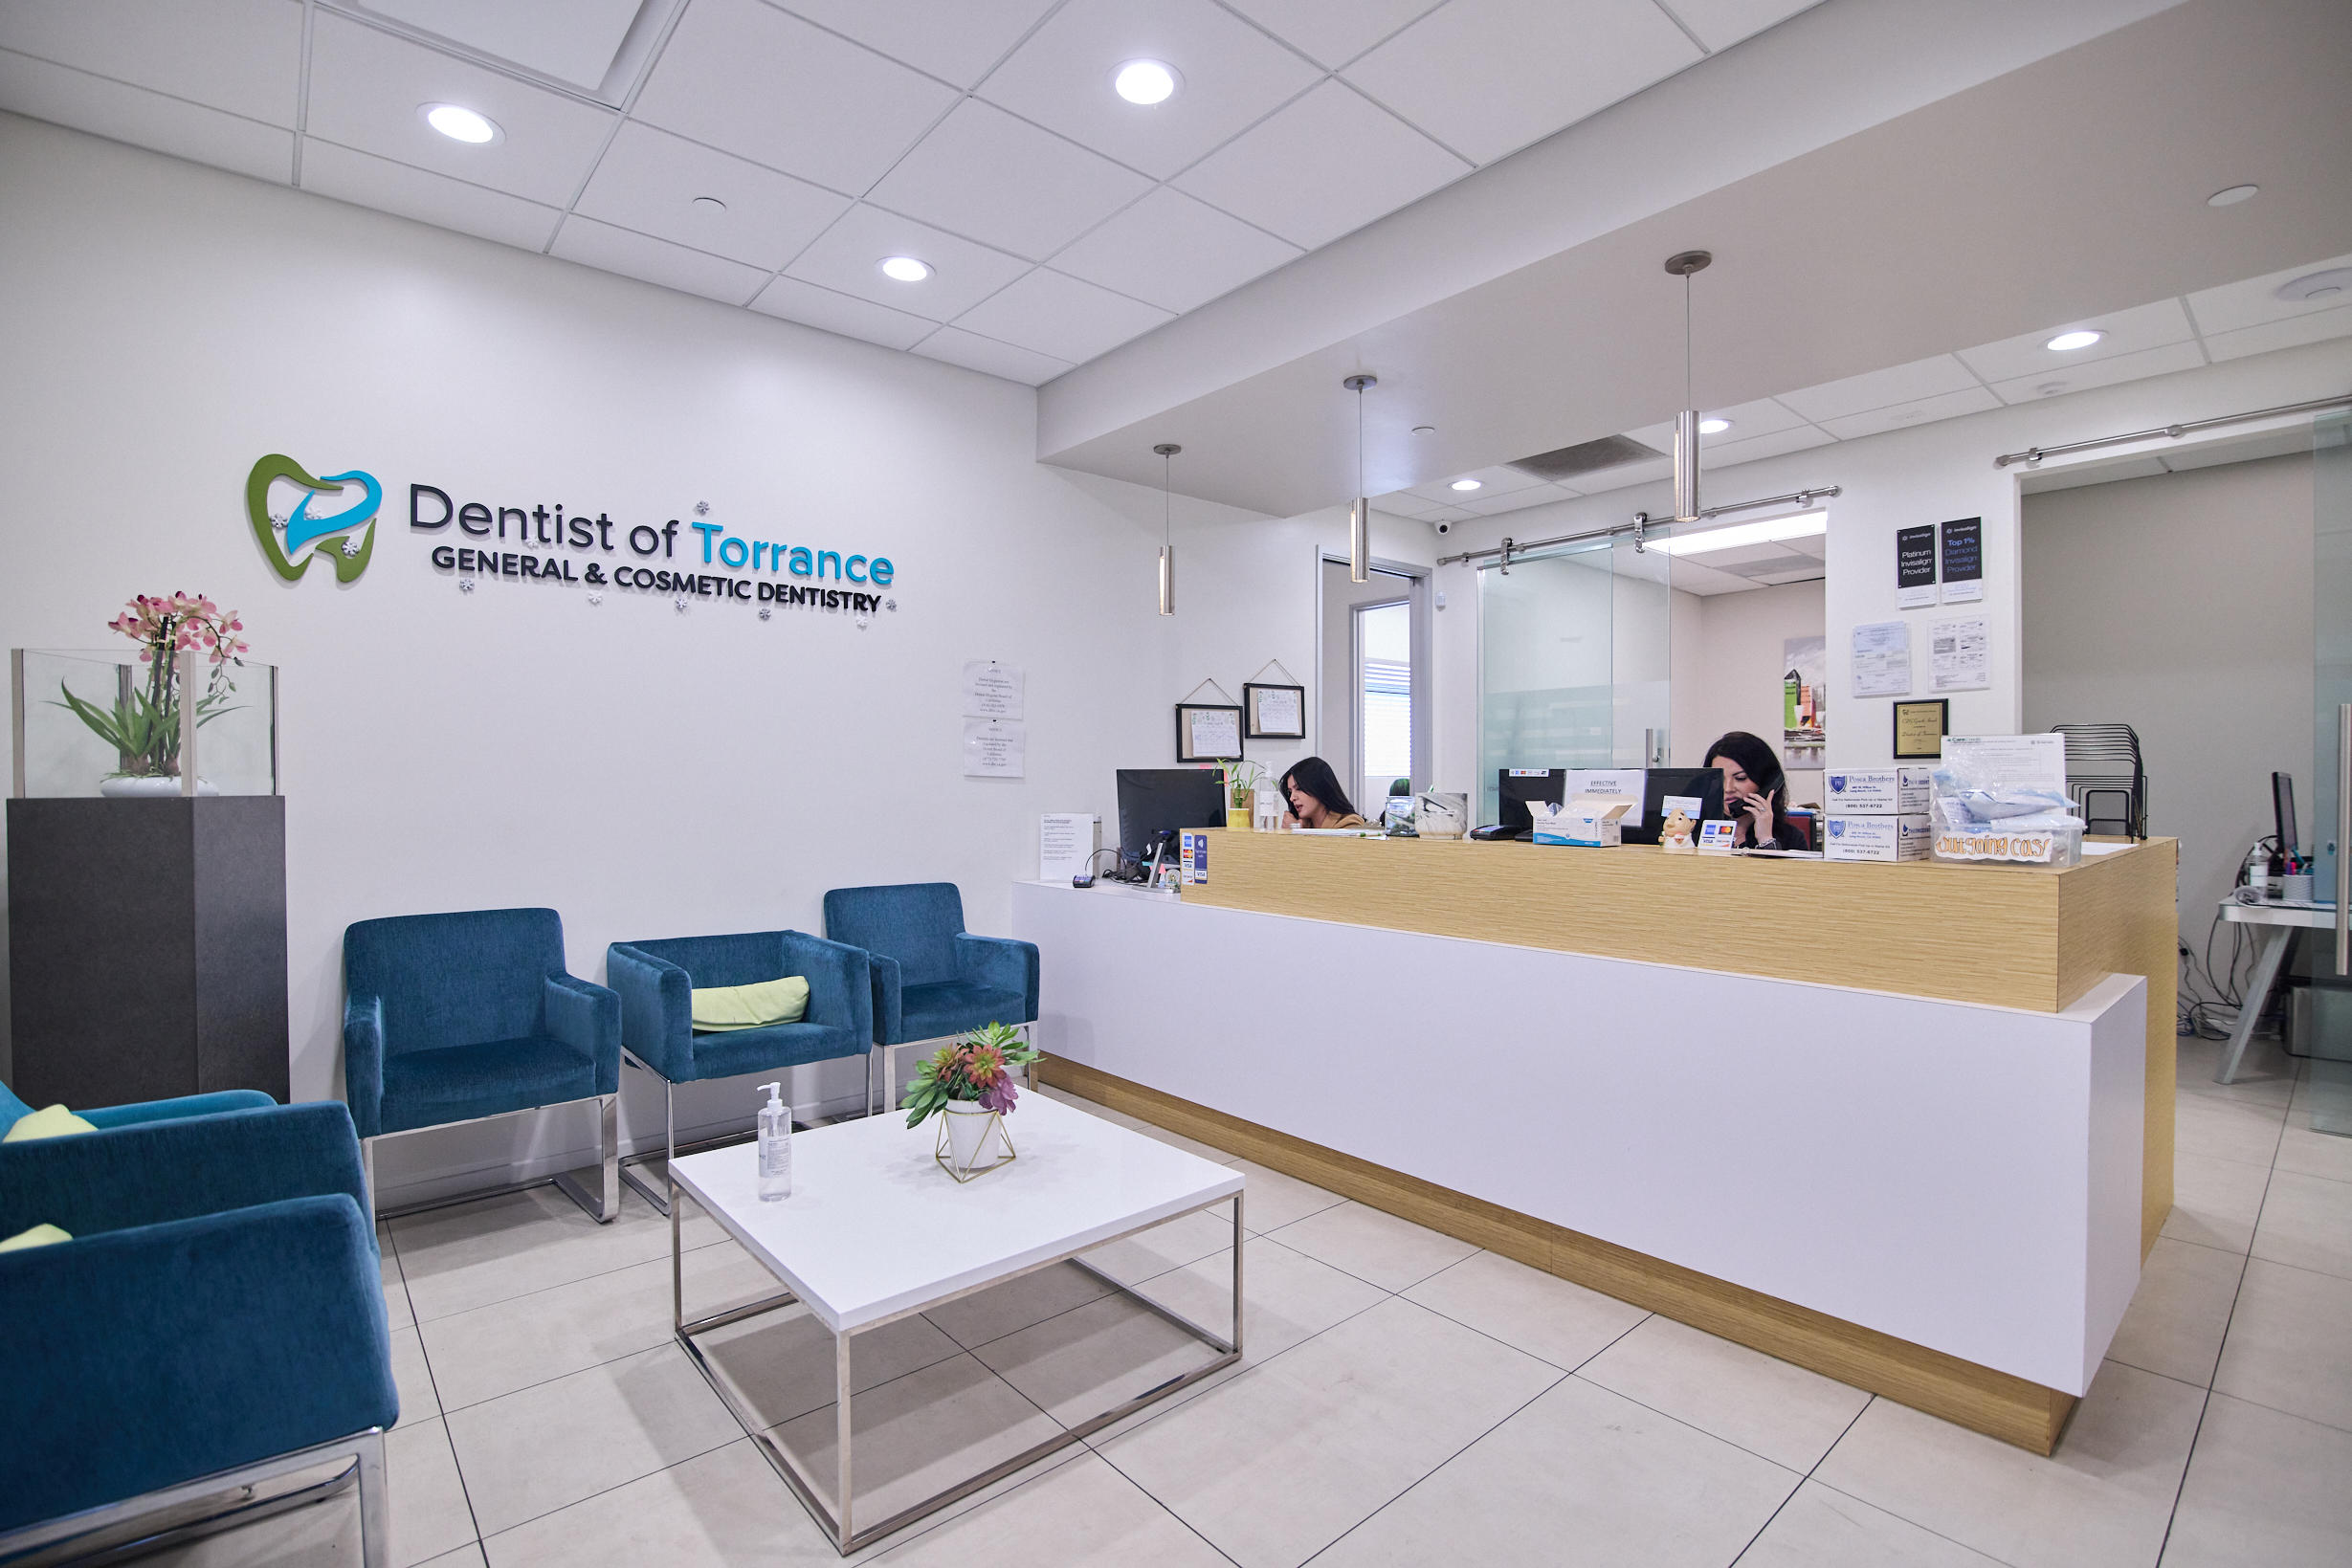 Orthodontics of Torrance Torrance (424)201-0712